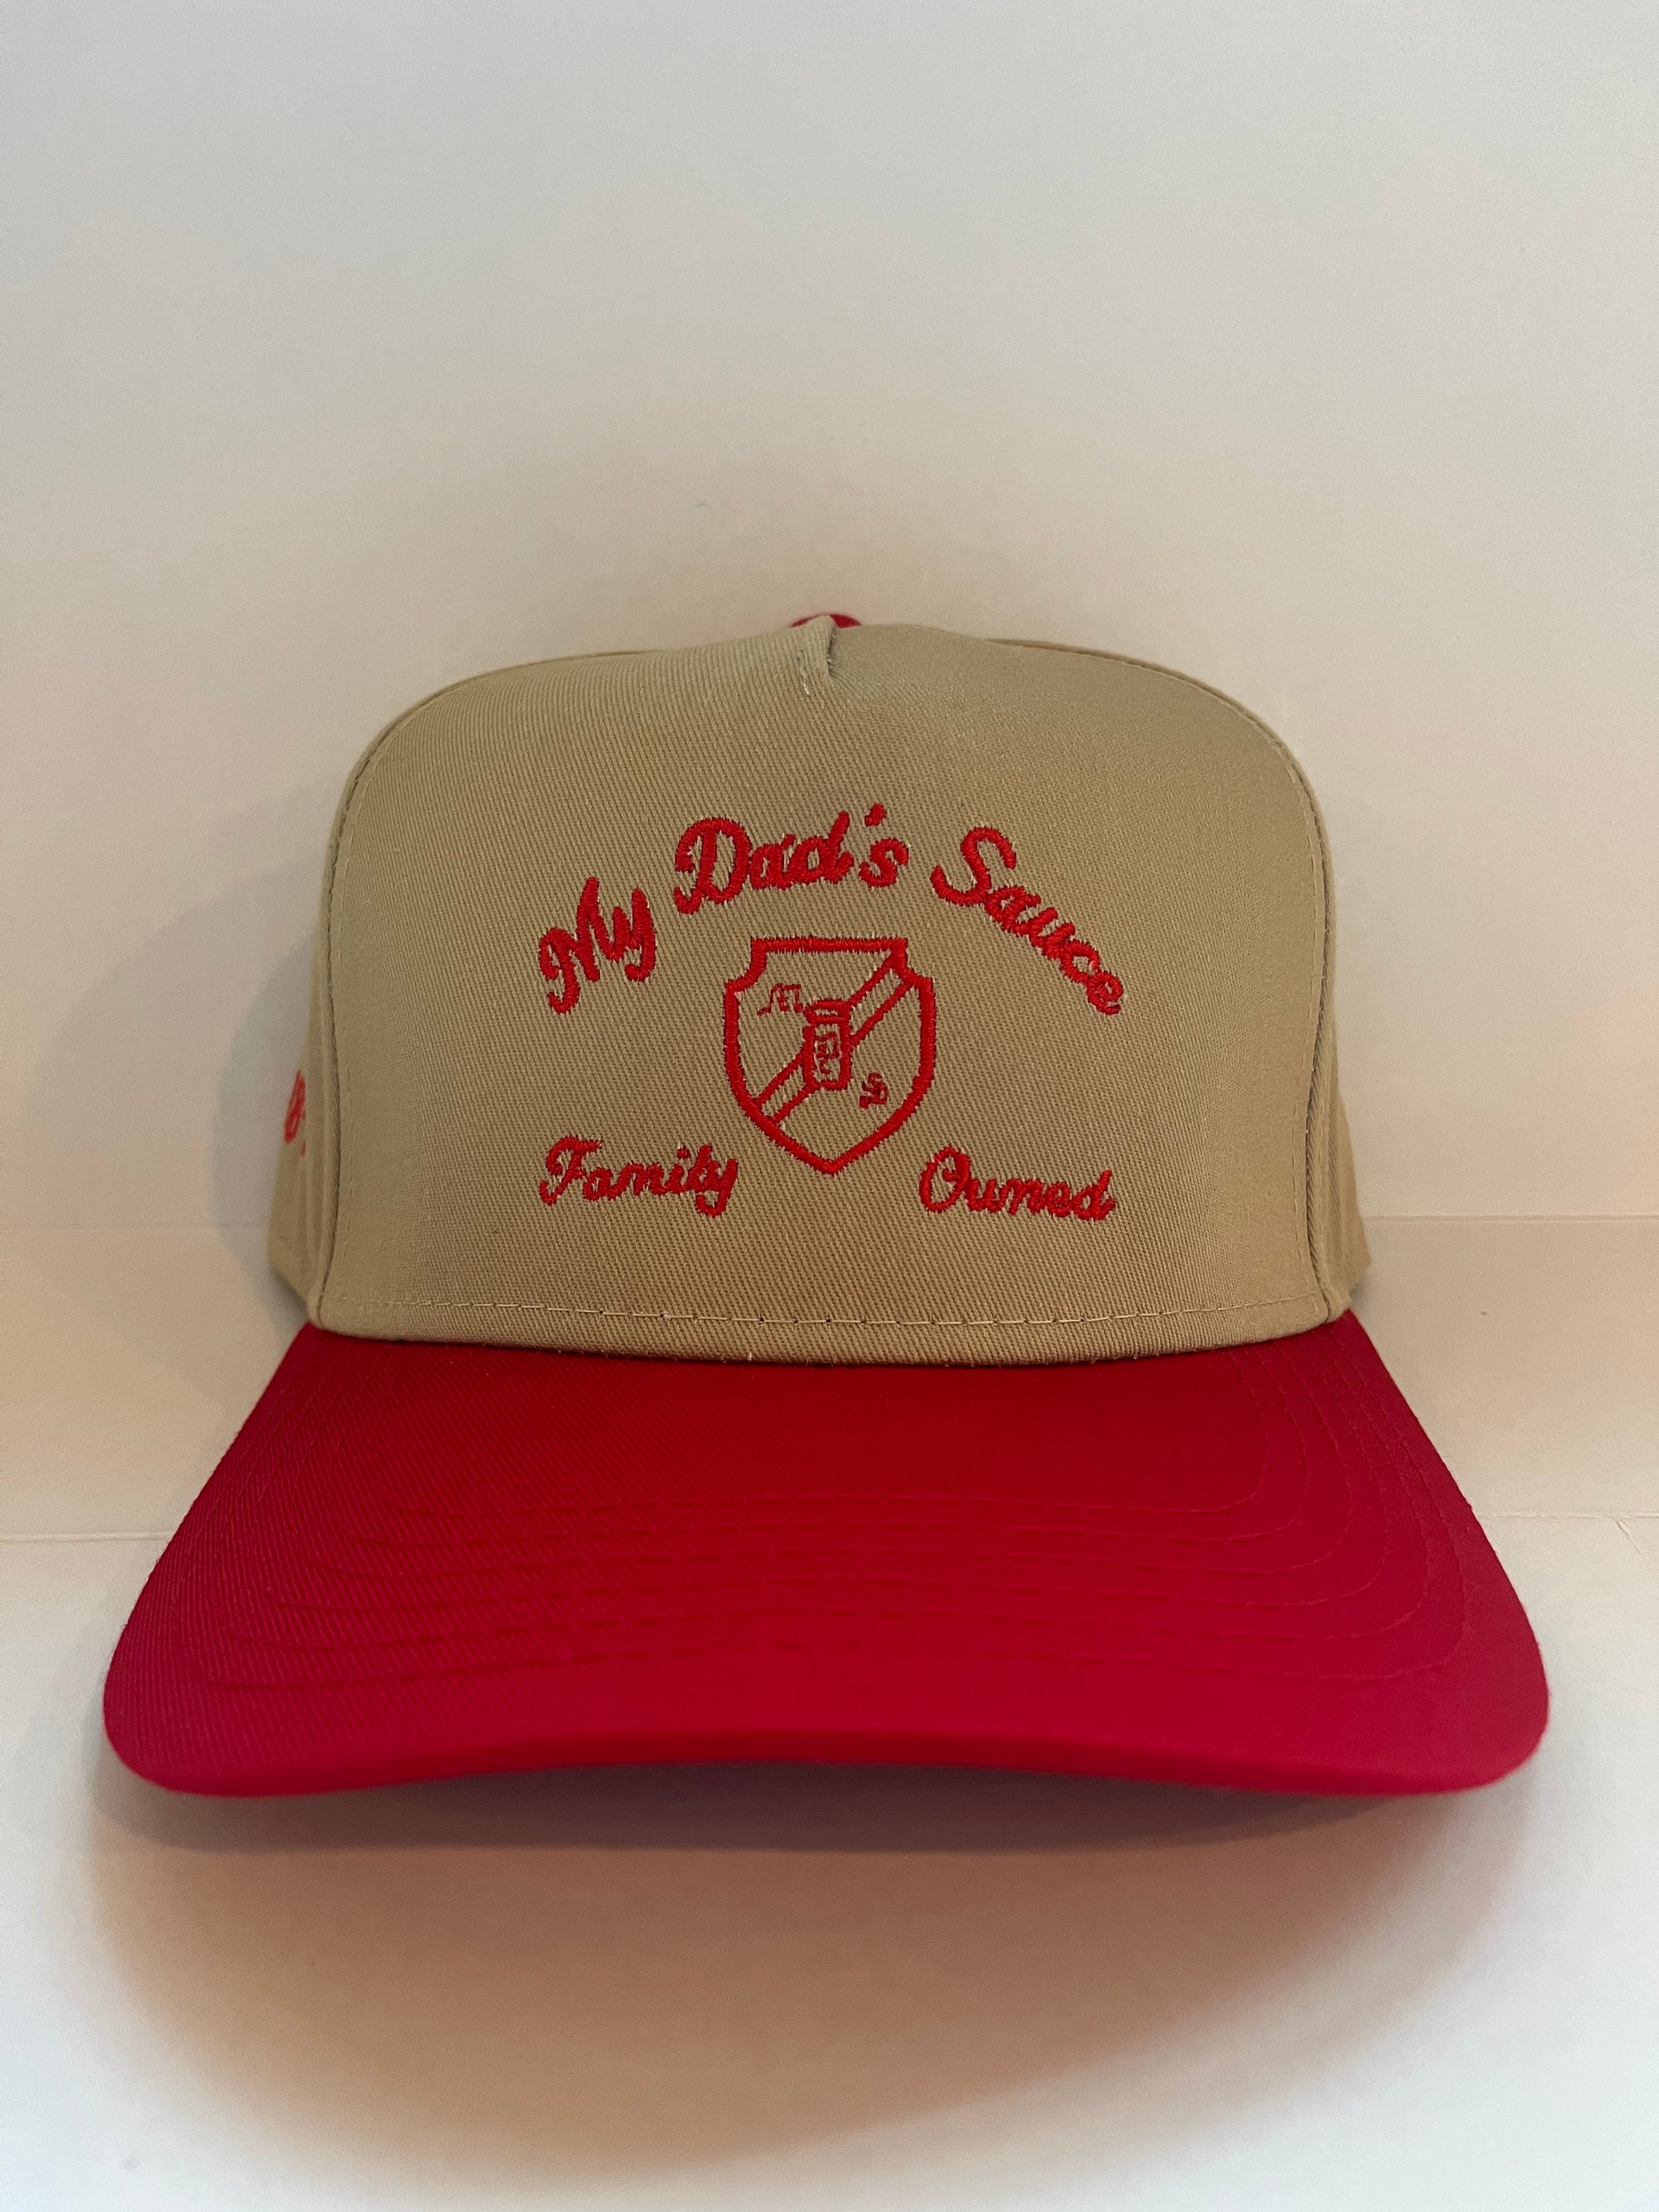 My Dad's Hat